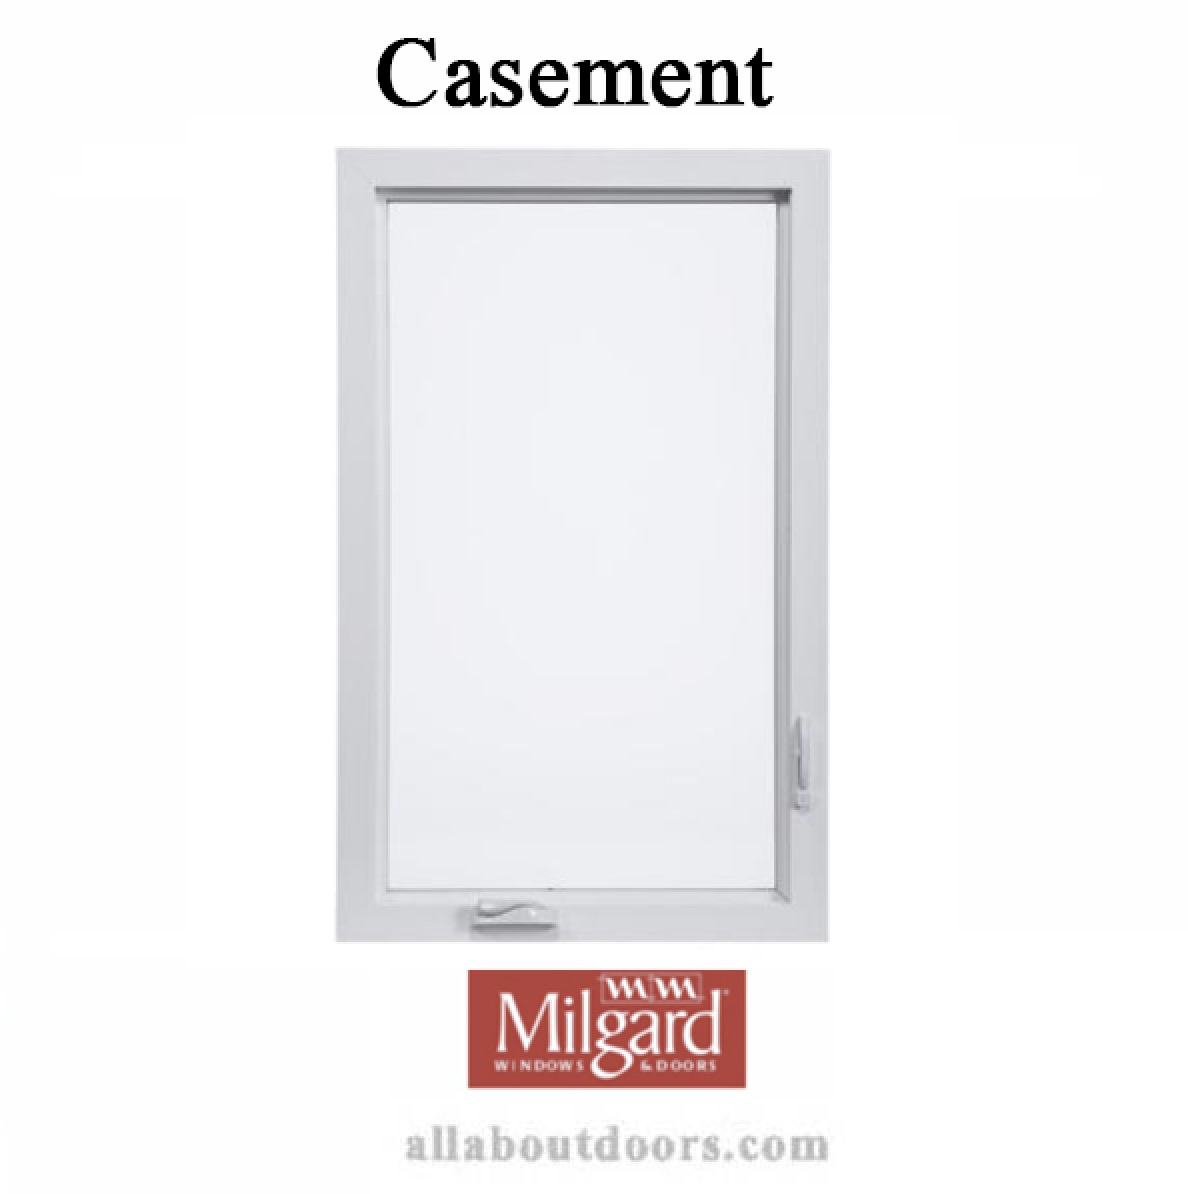 Milgard Casement Window Hardware